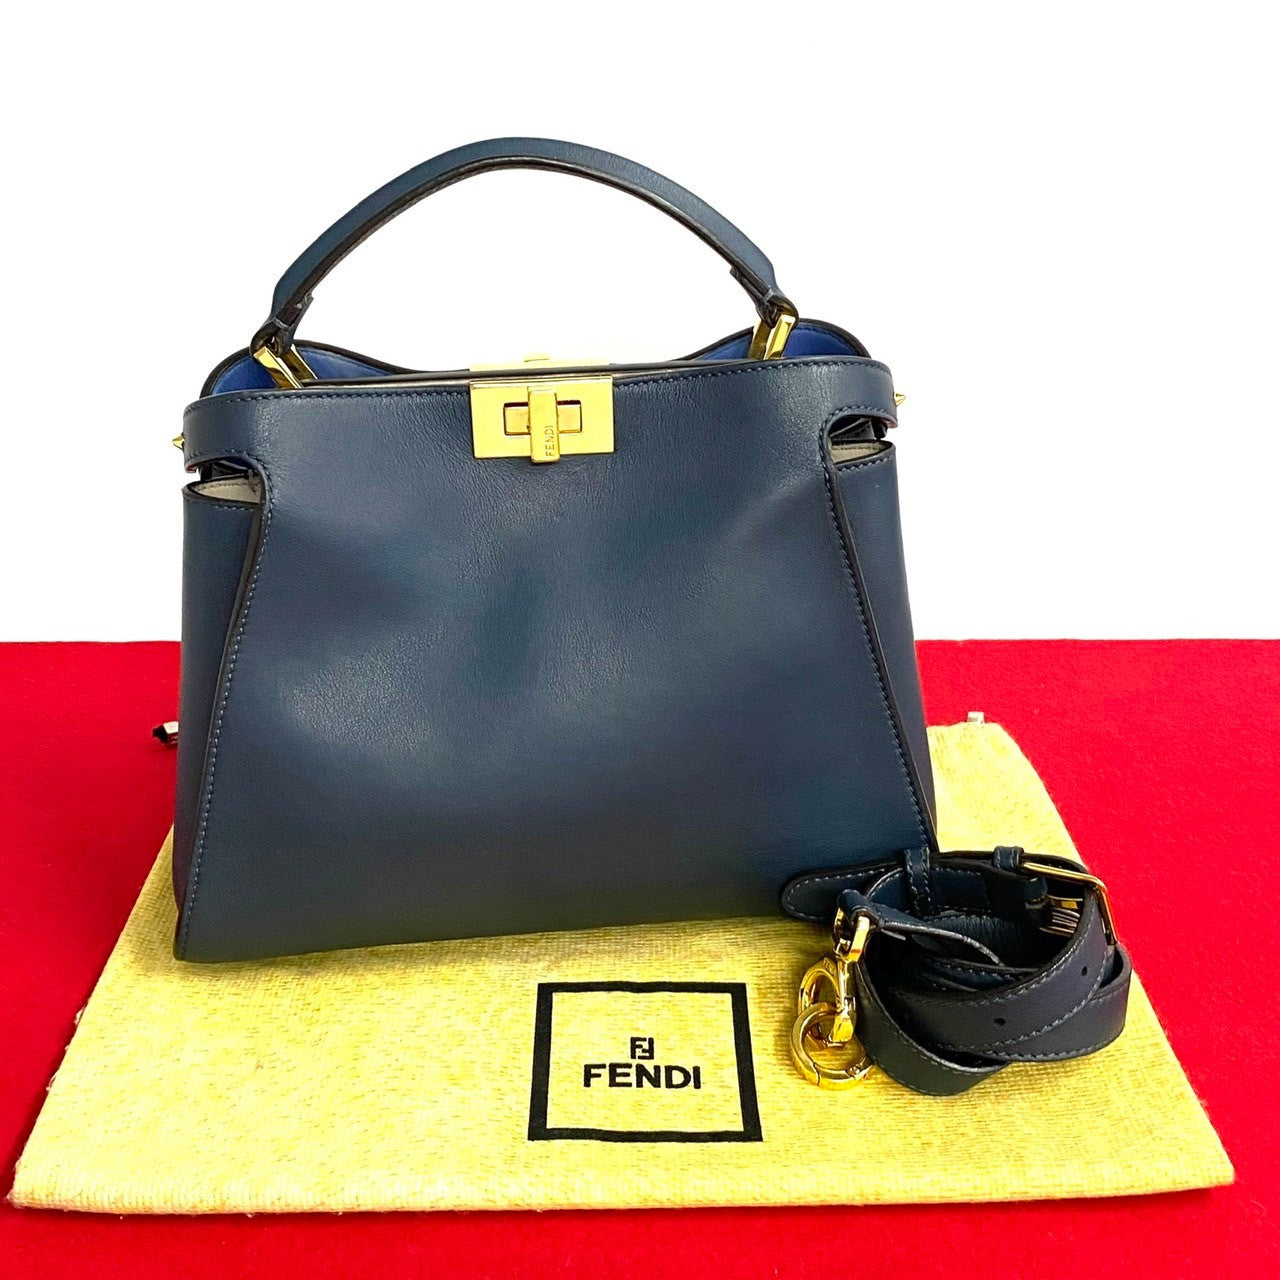 Fendi Leather Peekaboo Handbag  Leather Handbag in Good condition